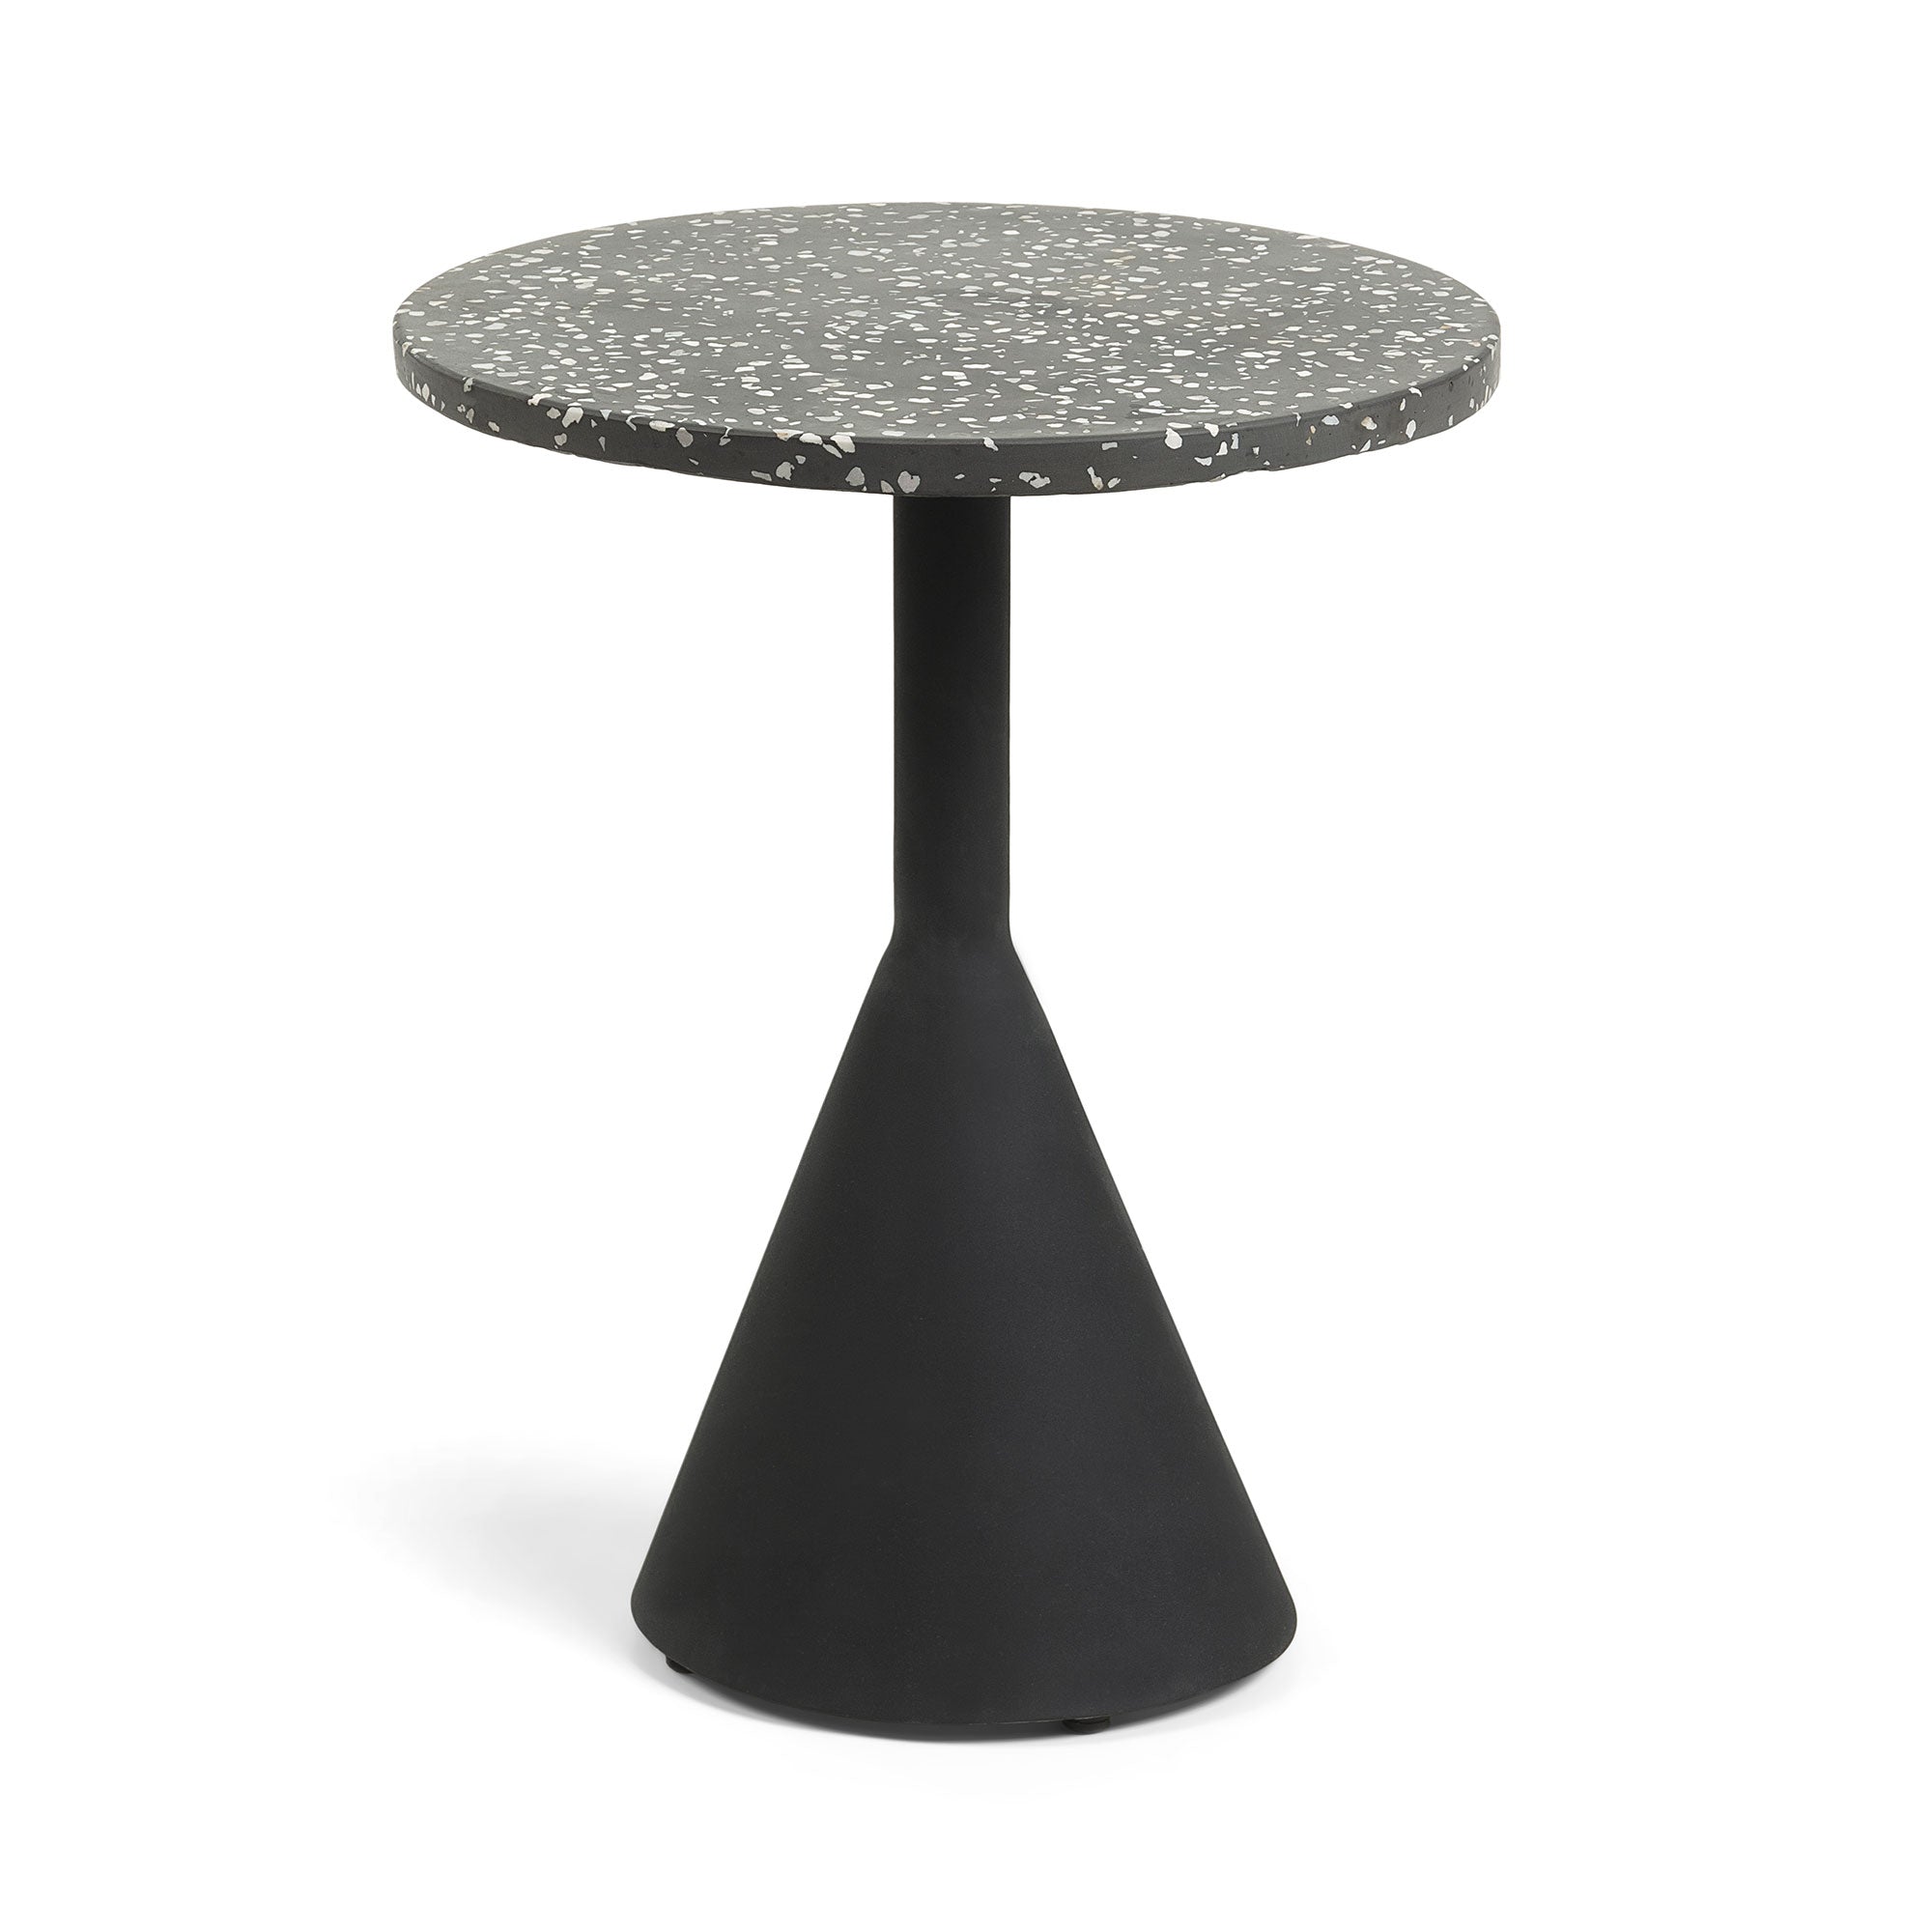 Delano fekete terrazzo kisasztal fekete acéllábakkal, Ø 40 cm, fekete kivitelben